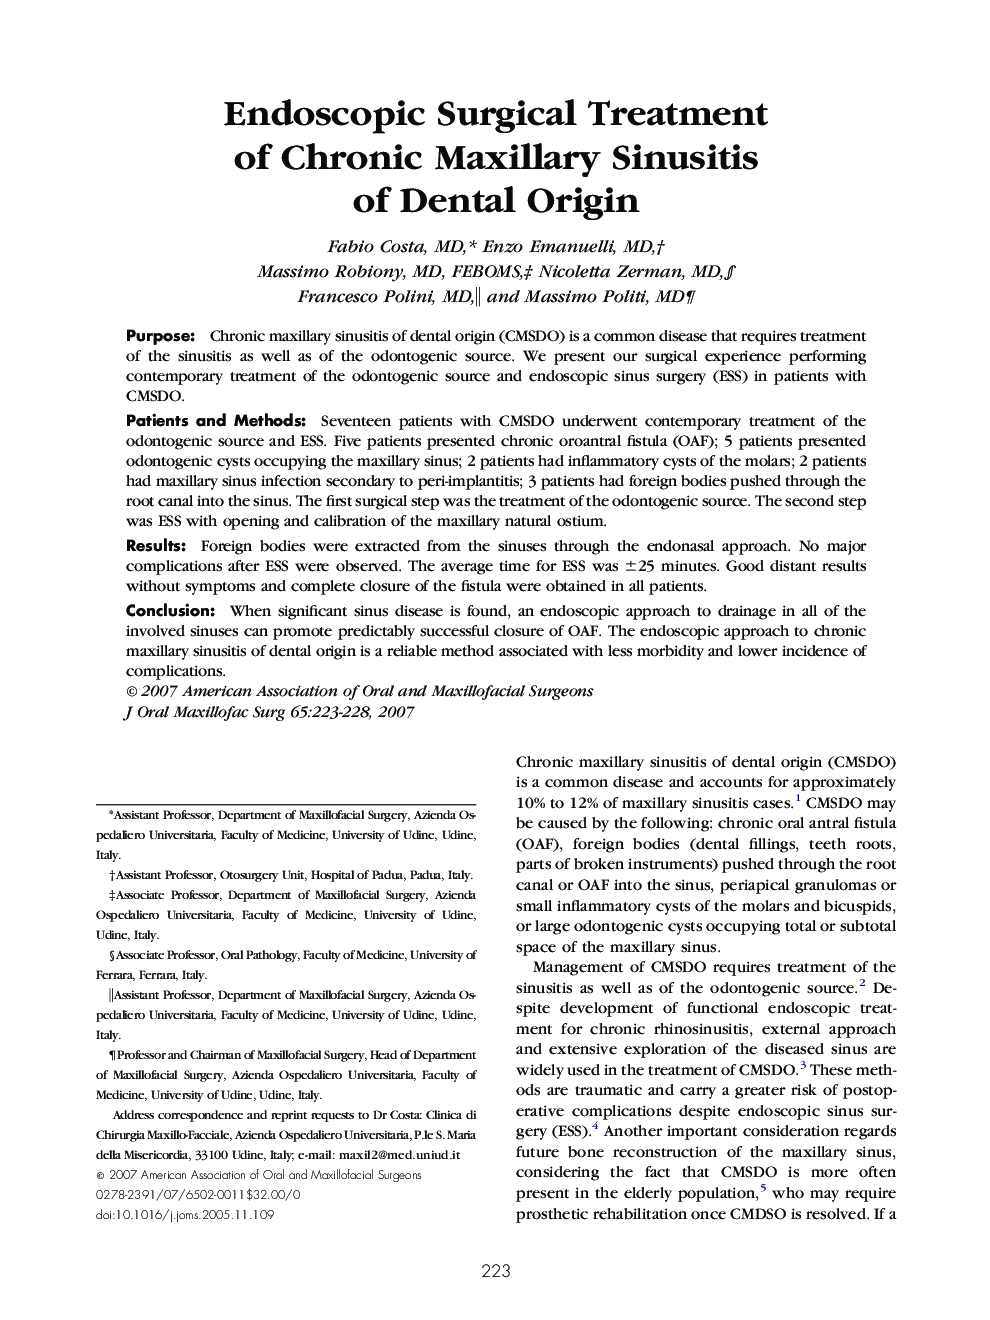 Endoscopic Surgical Treatment of Chronic Maxillary Sinusitis of Dental Origin